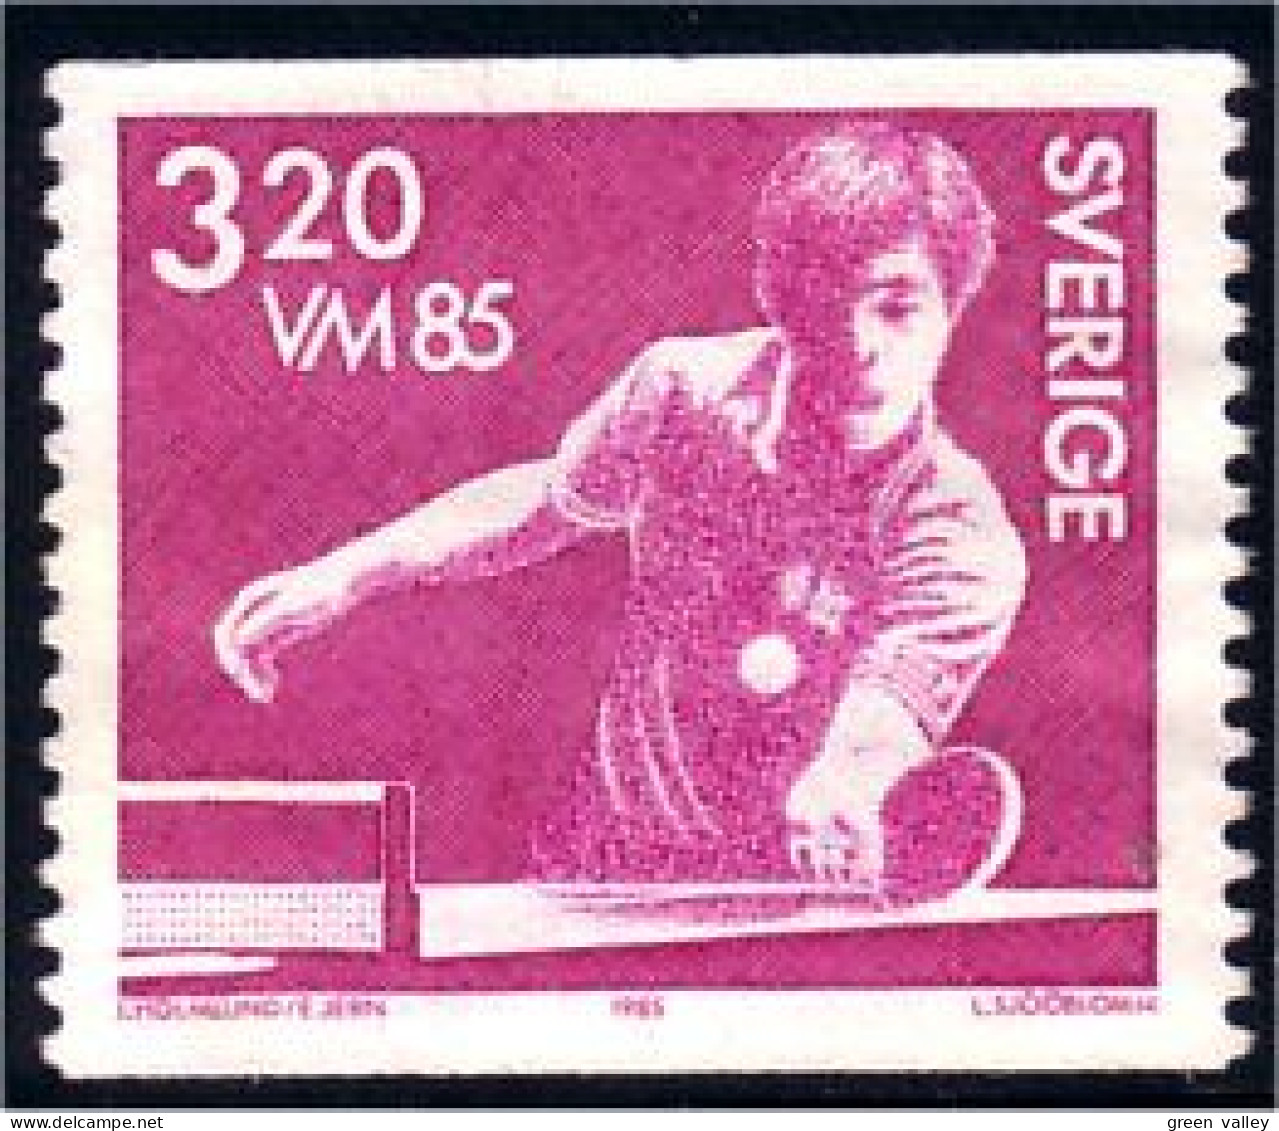 840 Sweden Table Tennis Ping Pong No Gum (SWE-84) - Tennis Tavolo